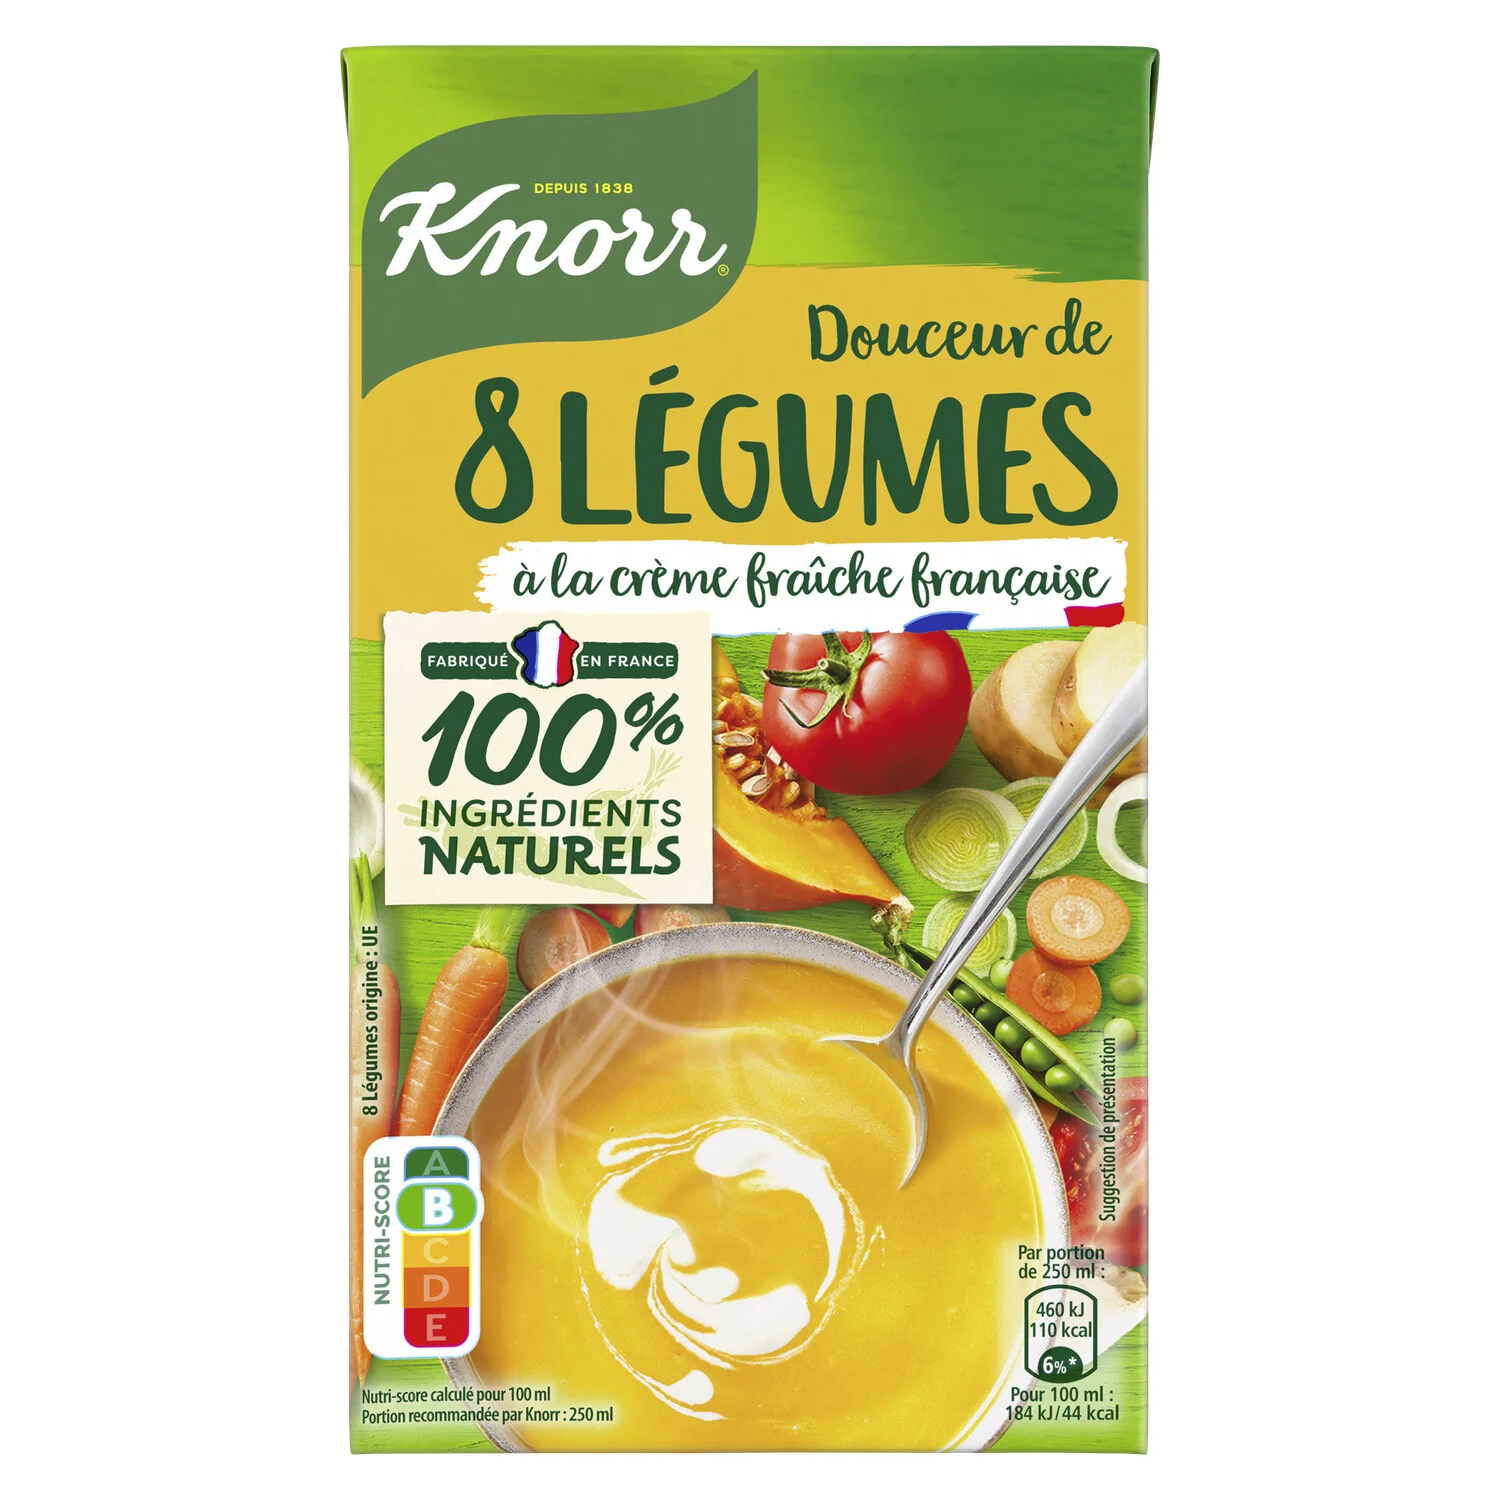 Knorr 8 Vegetables soup with creme fraiche 1L